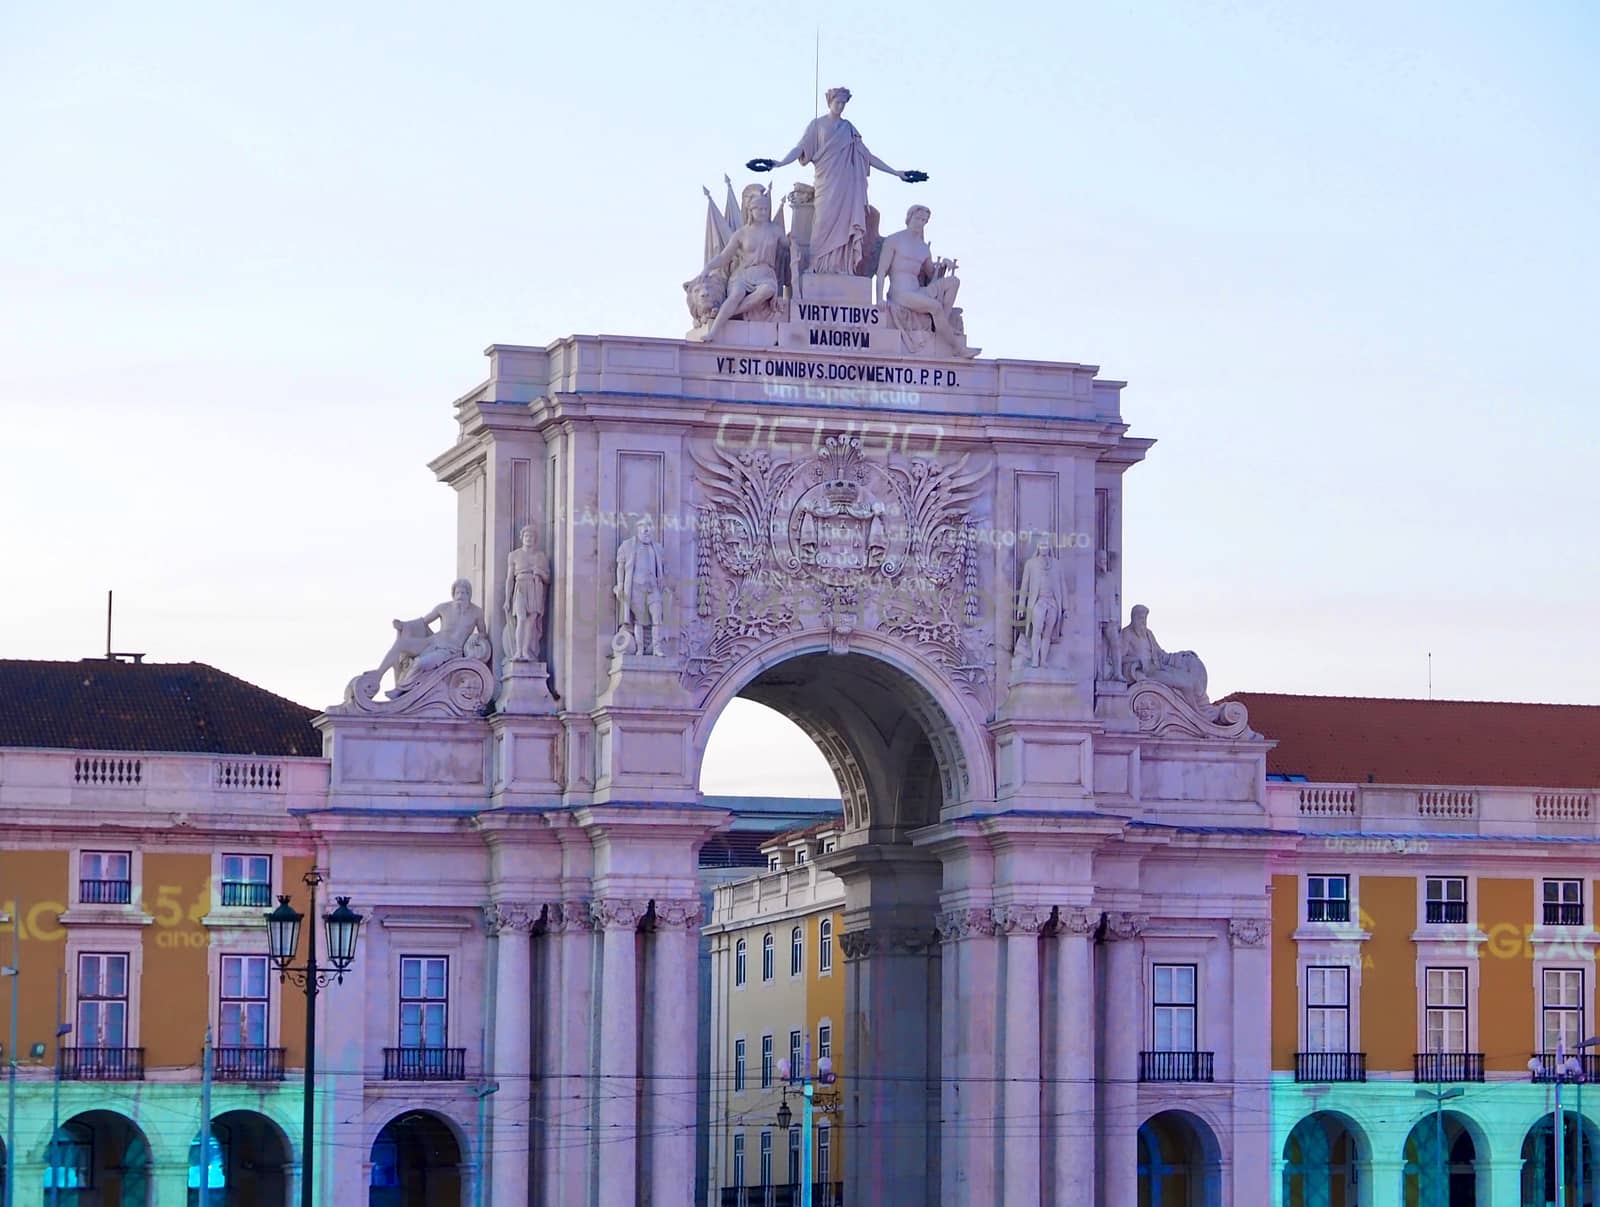 Lisbon, Portugal-05/27/2019: Arco da Rua Augusta at Praca do Comercio by Stimmungsbilder